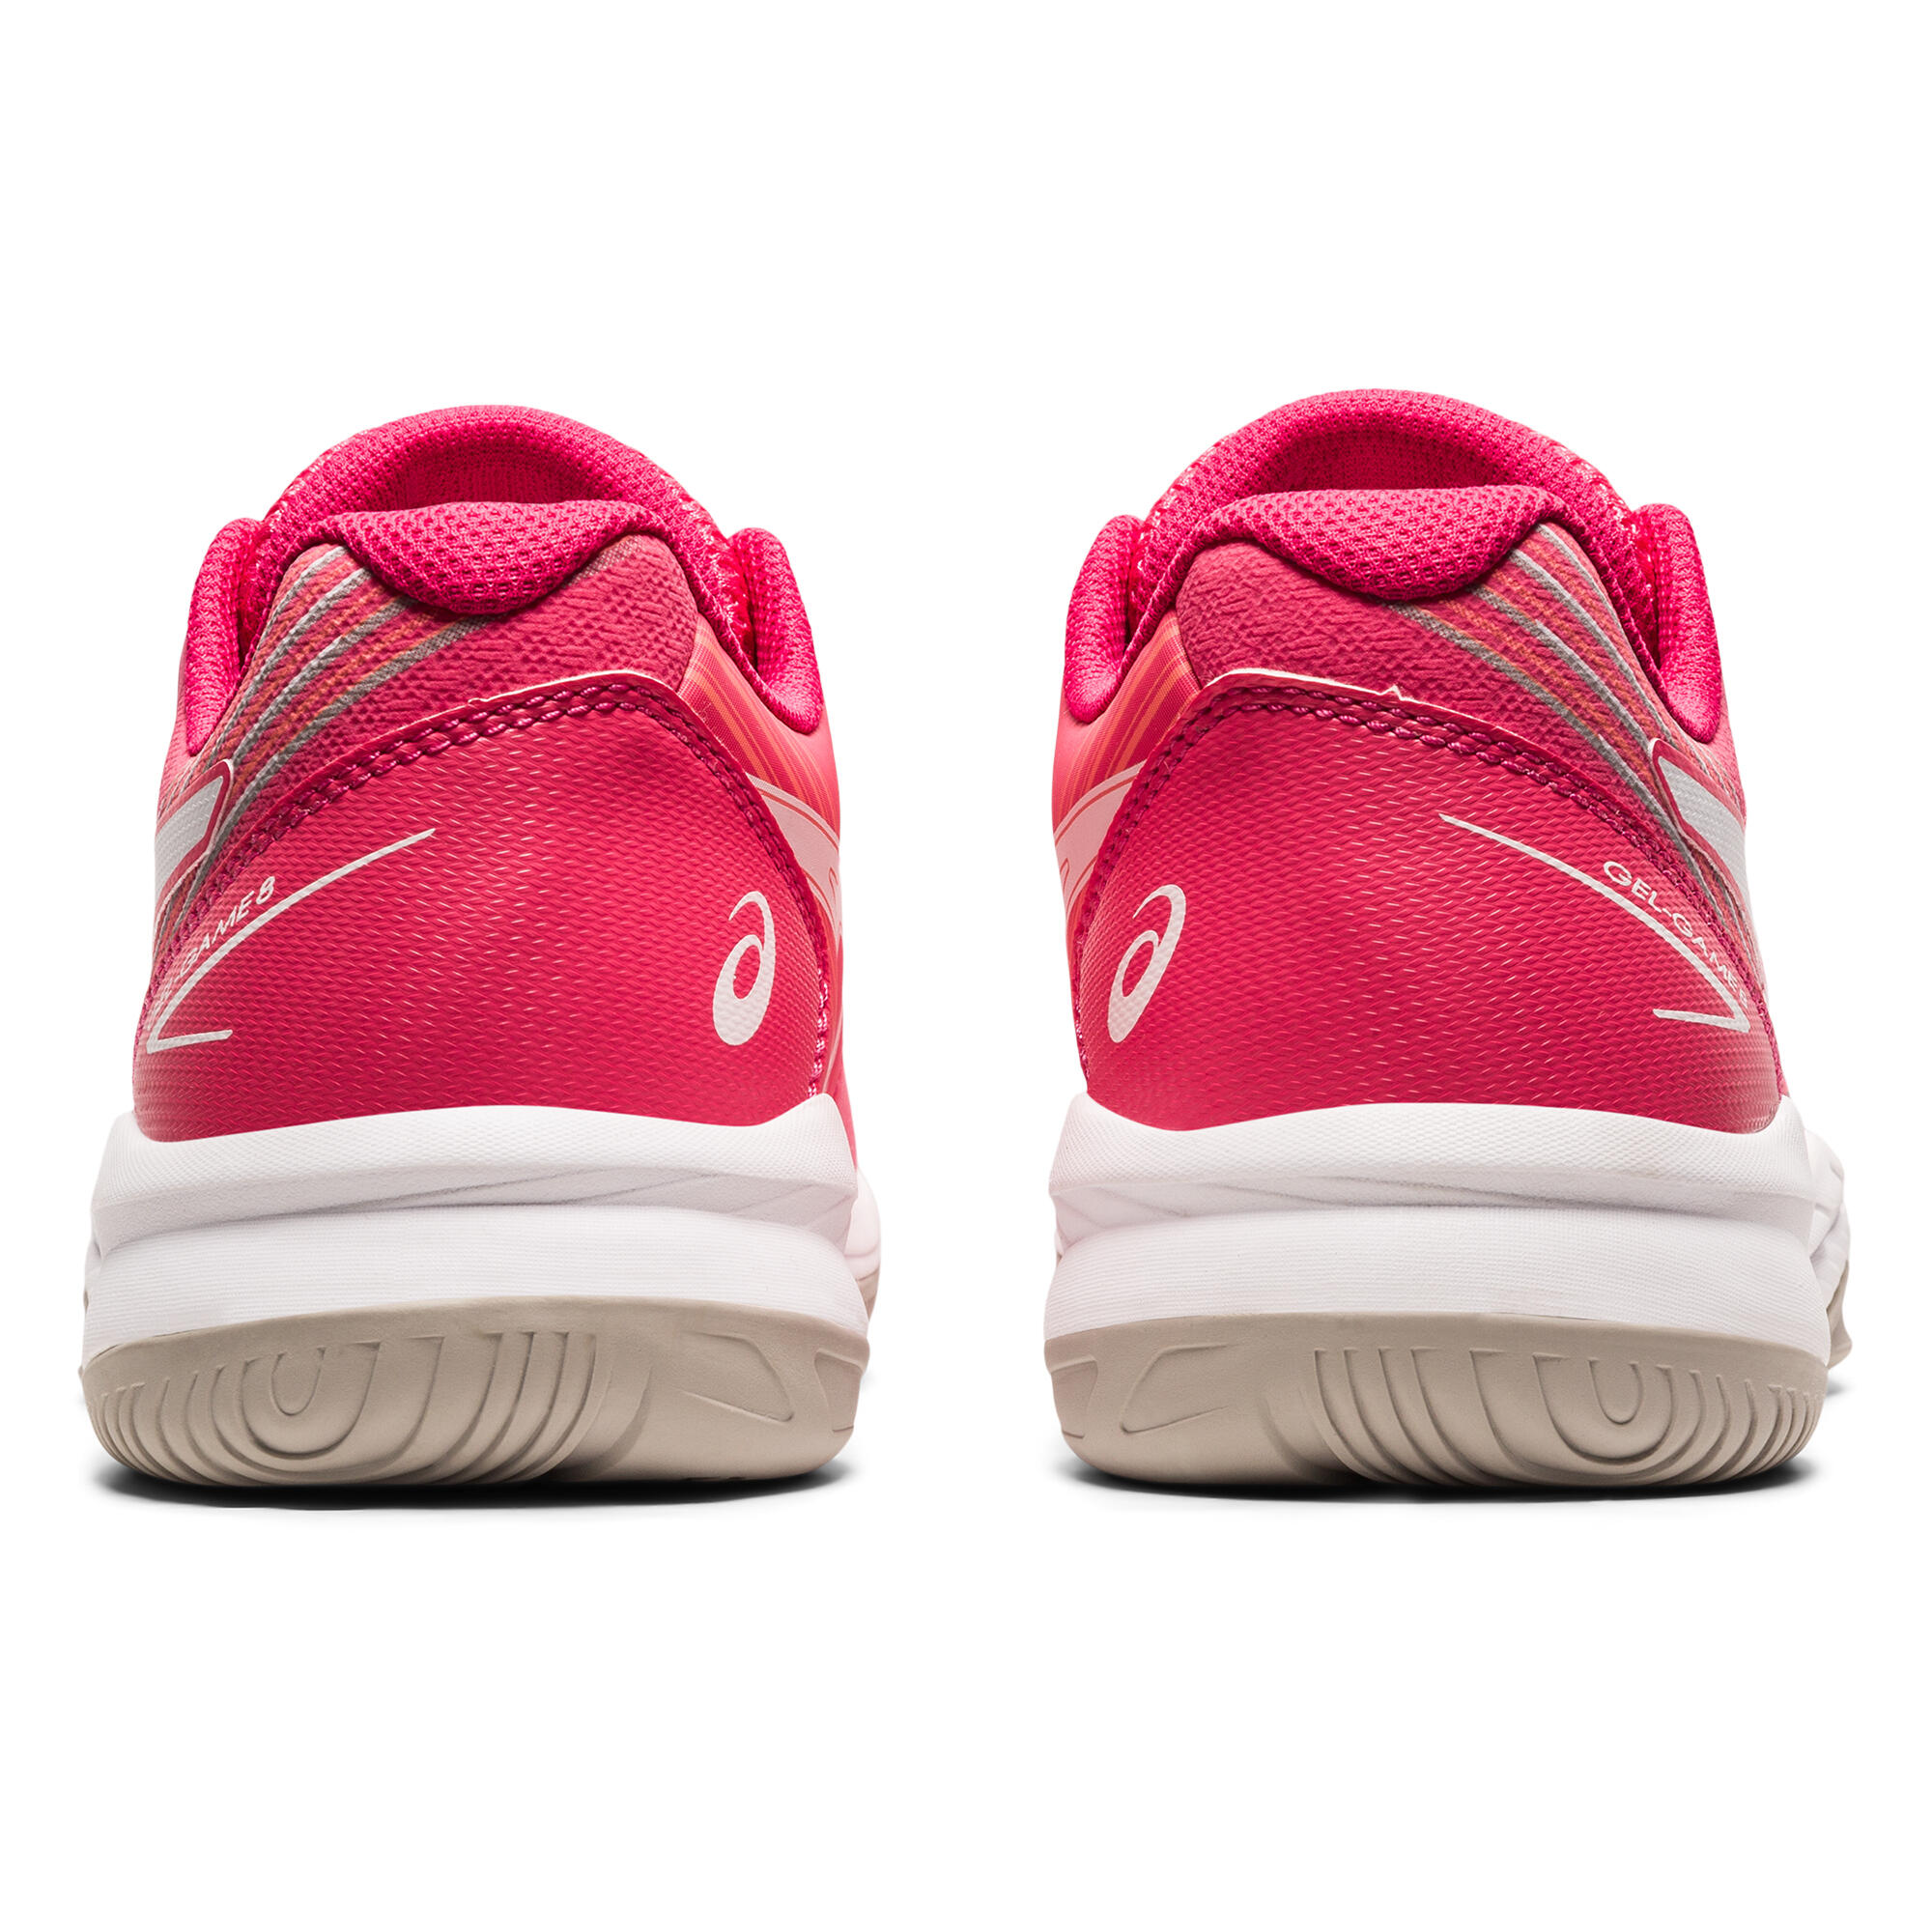 Women's Tennis Shoes Gel Game - Pink/White 7/7